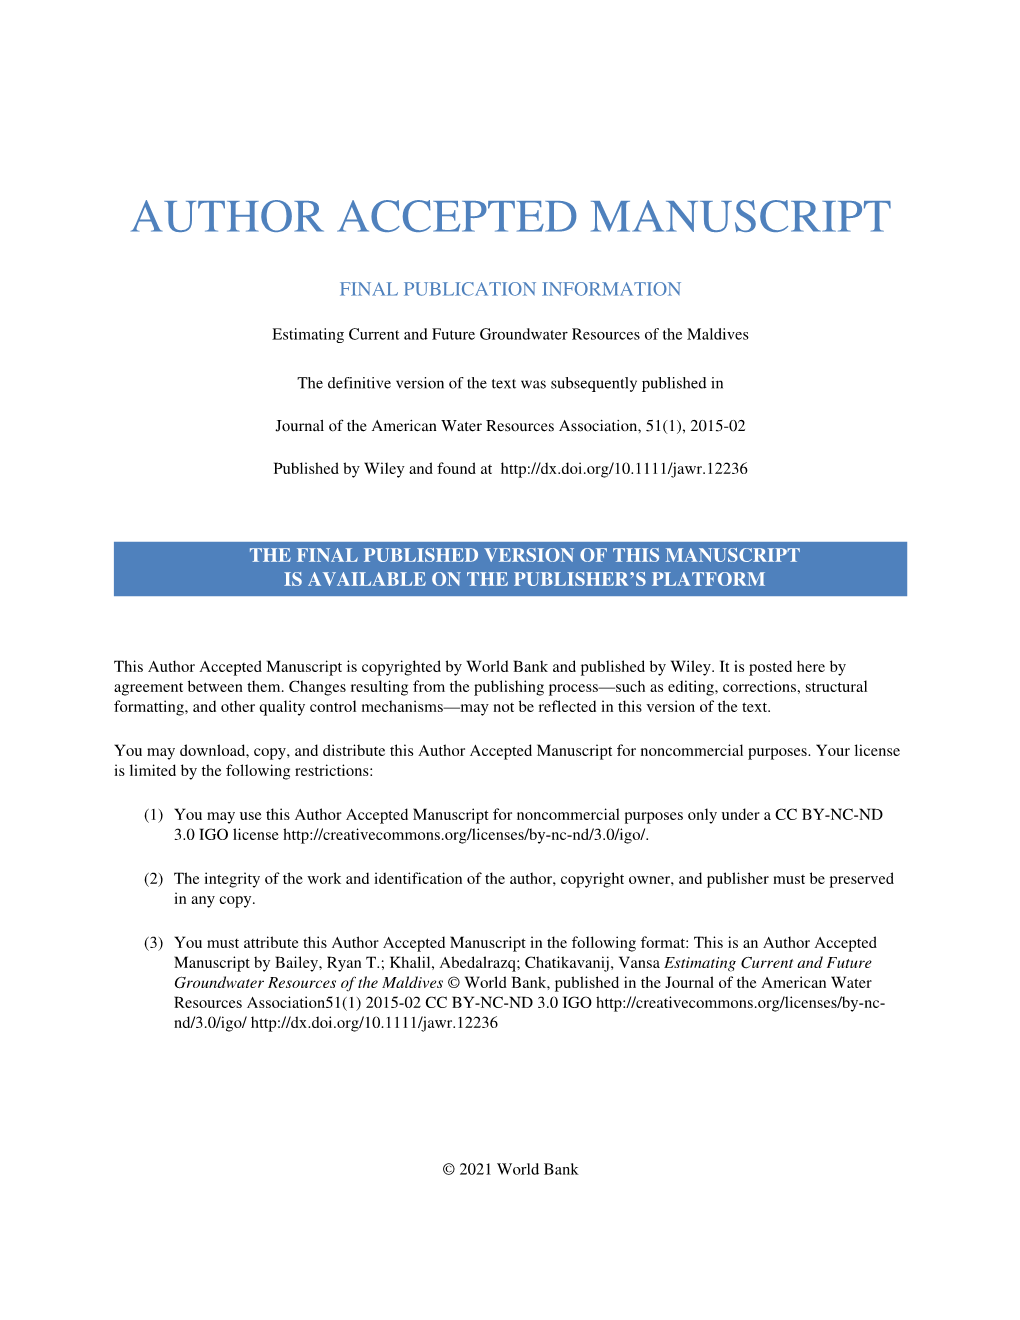 Author Accepted Manuscript